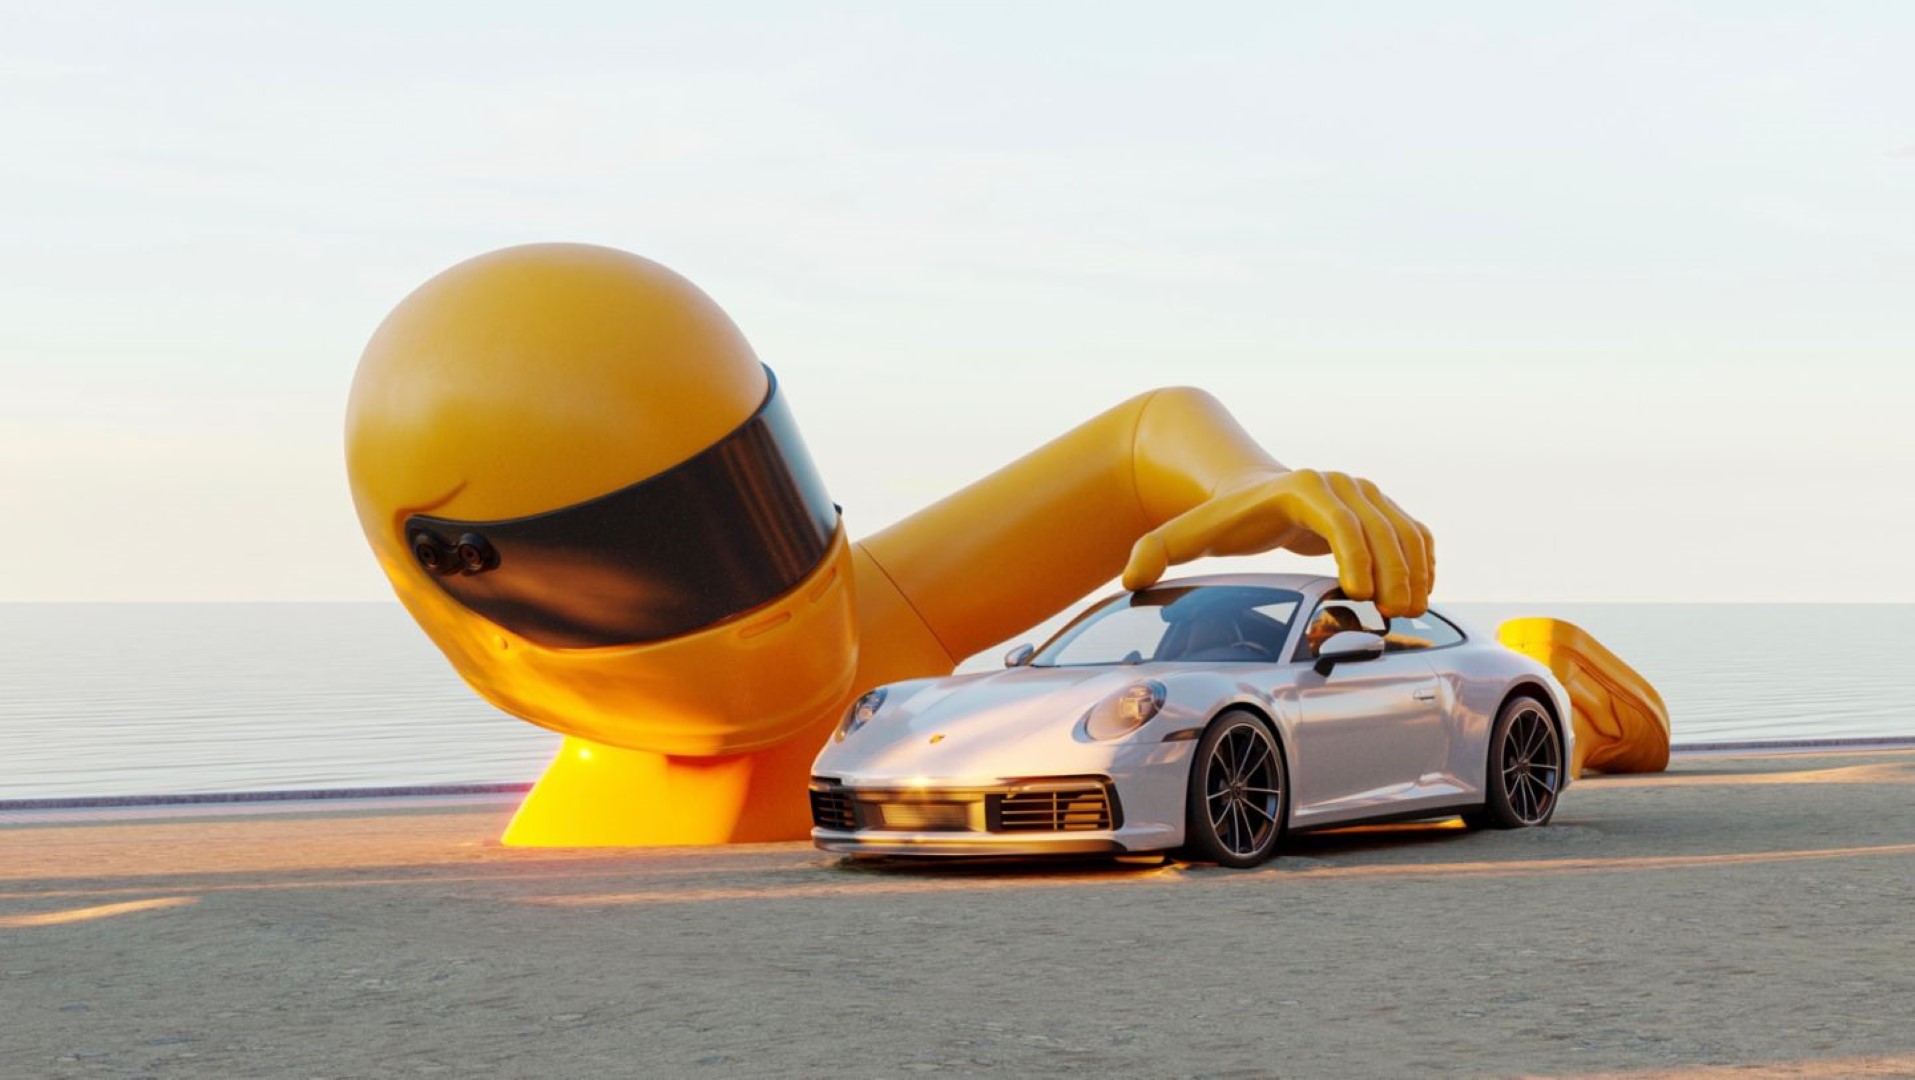 The Art of Dreams: Η Porsche μας καλεί να ονειρευτούμε!